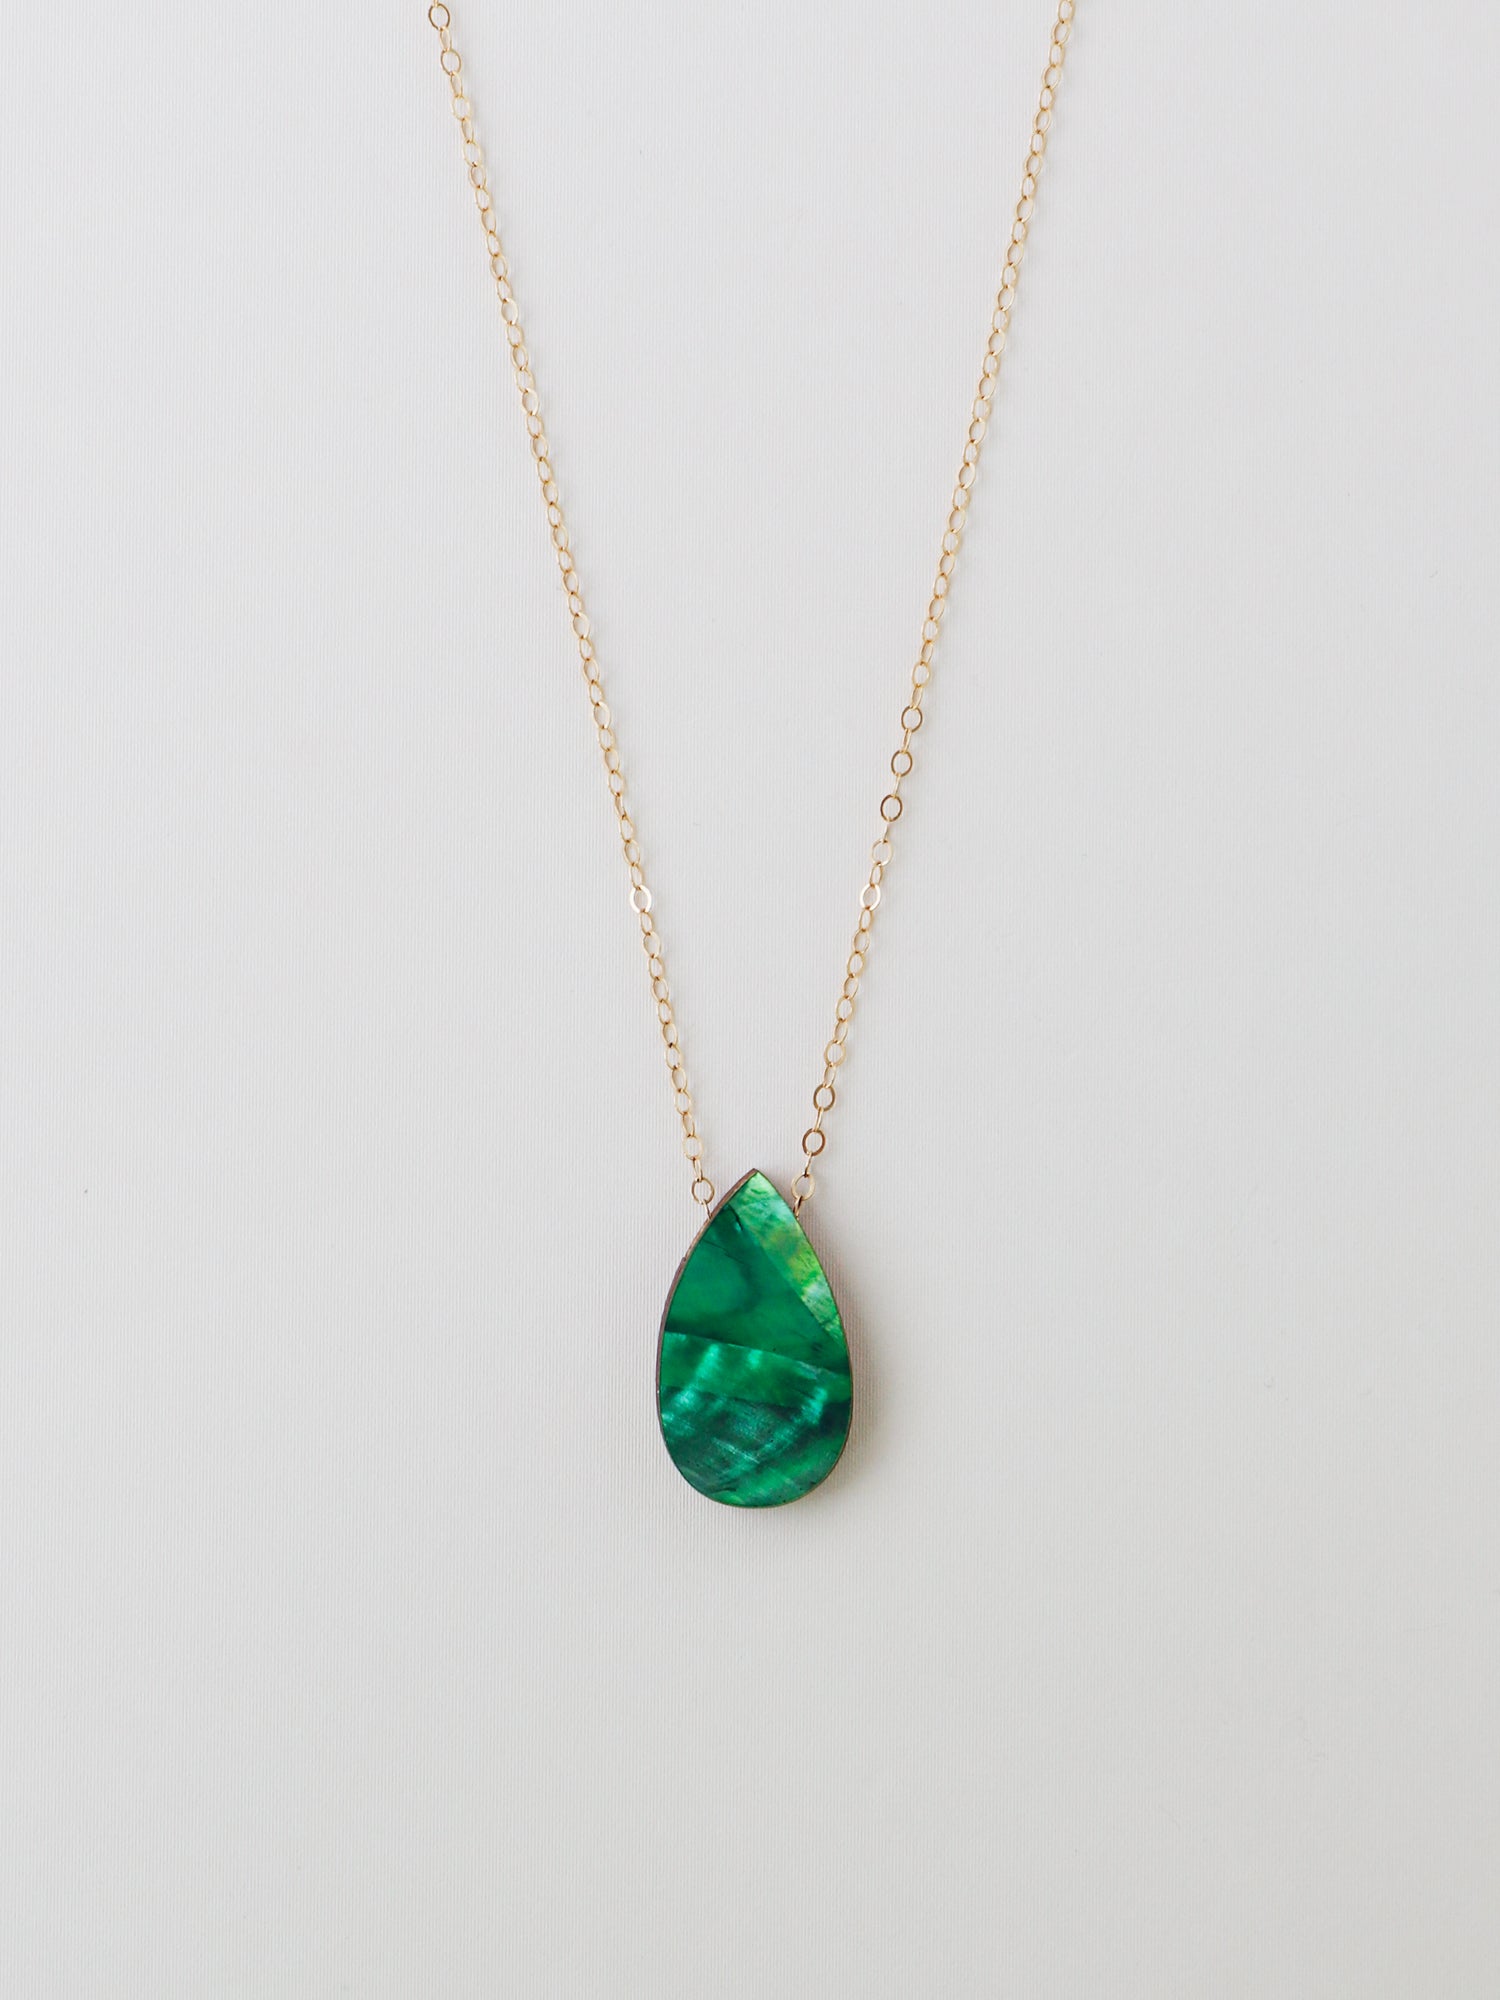 Raindrop Necklace in Emerald